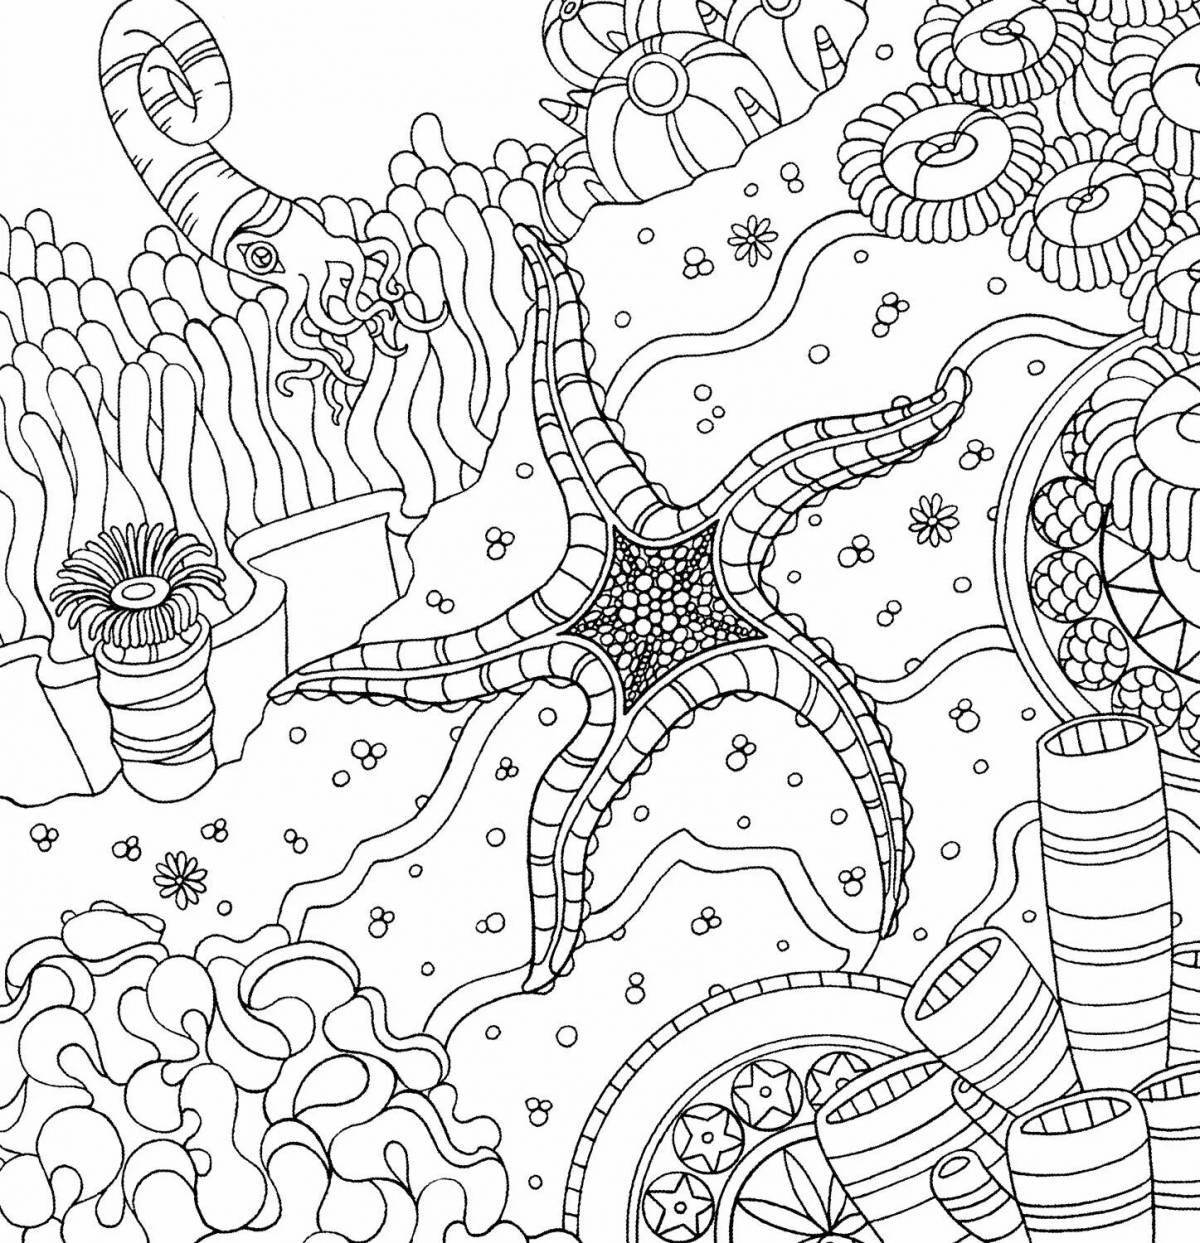 Fascinating anti-stress marine life coloring book